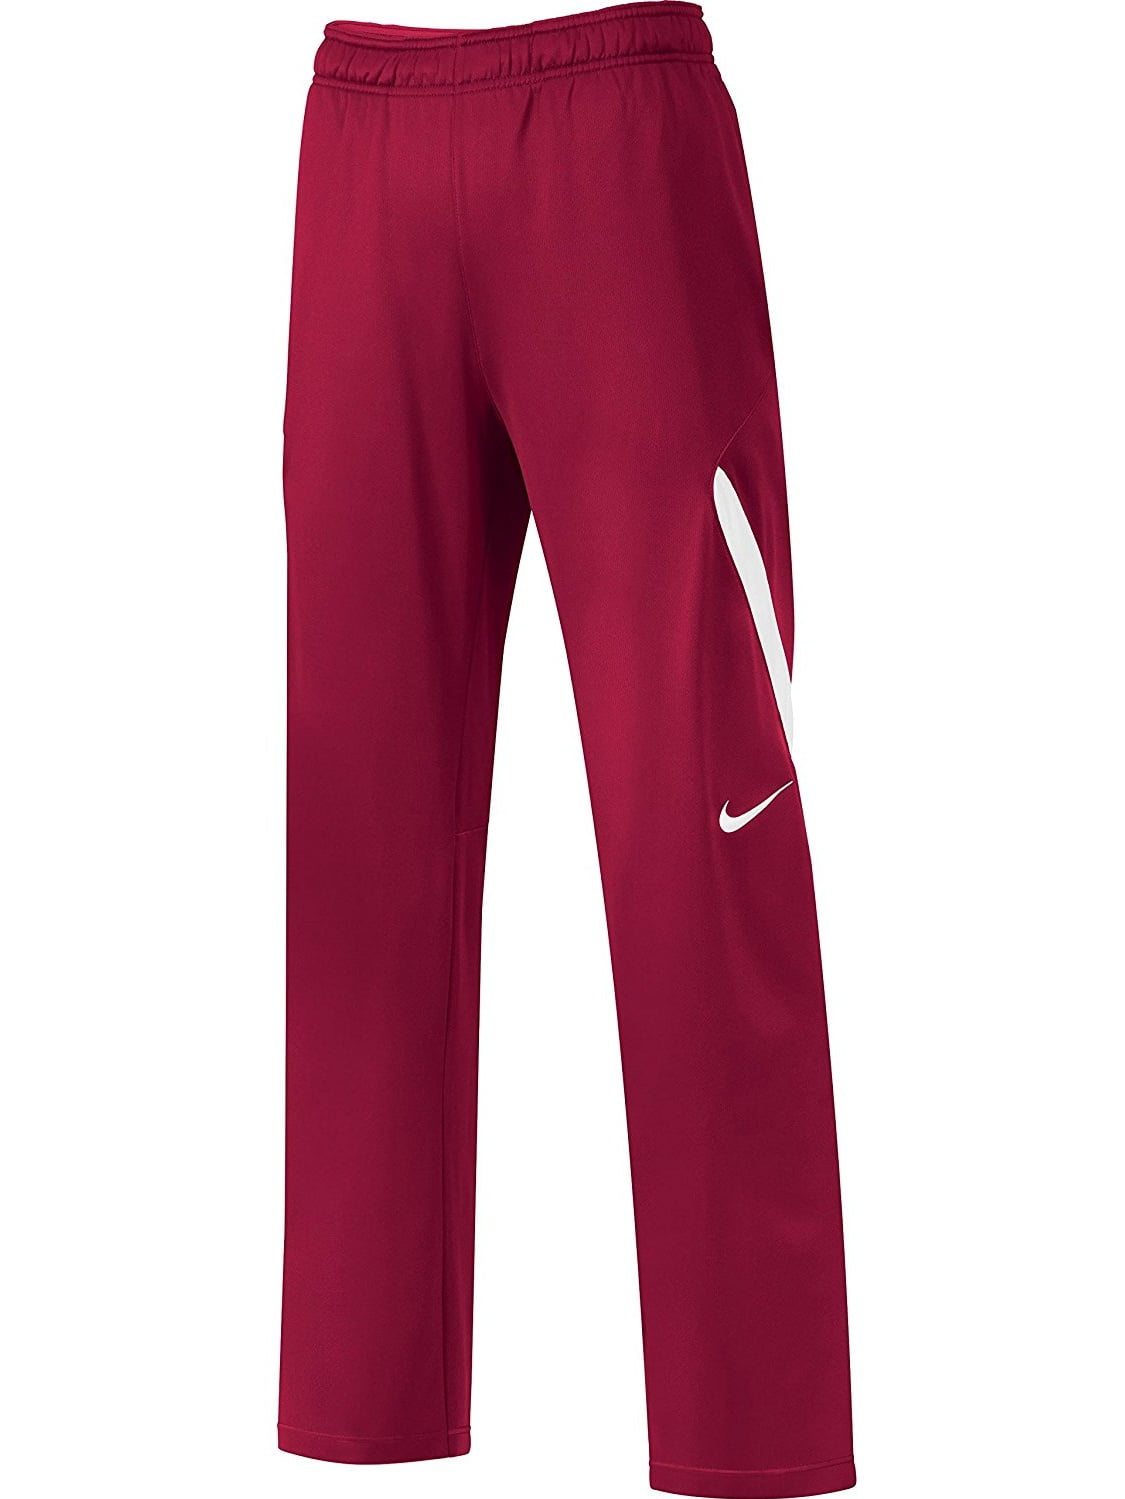 Nike Men's Enforcer Warm-Up Training Pant - Walmart.com